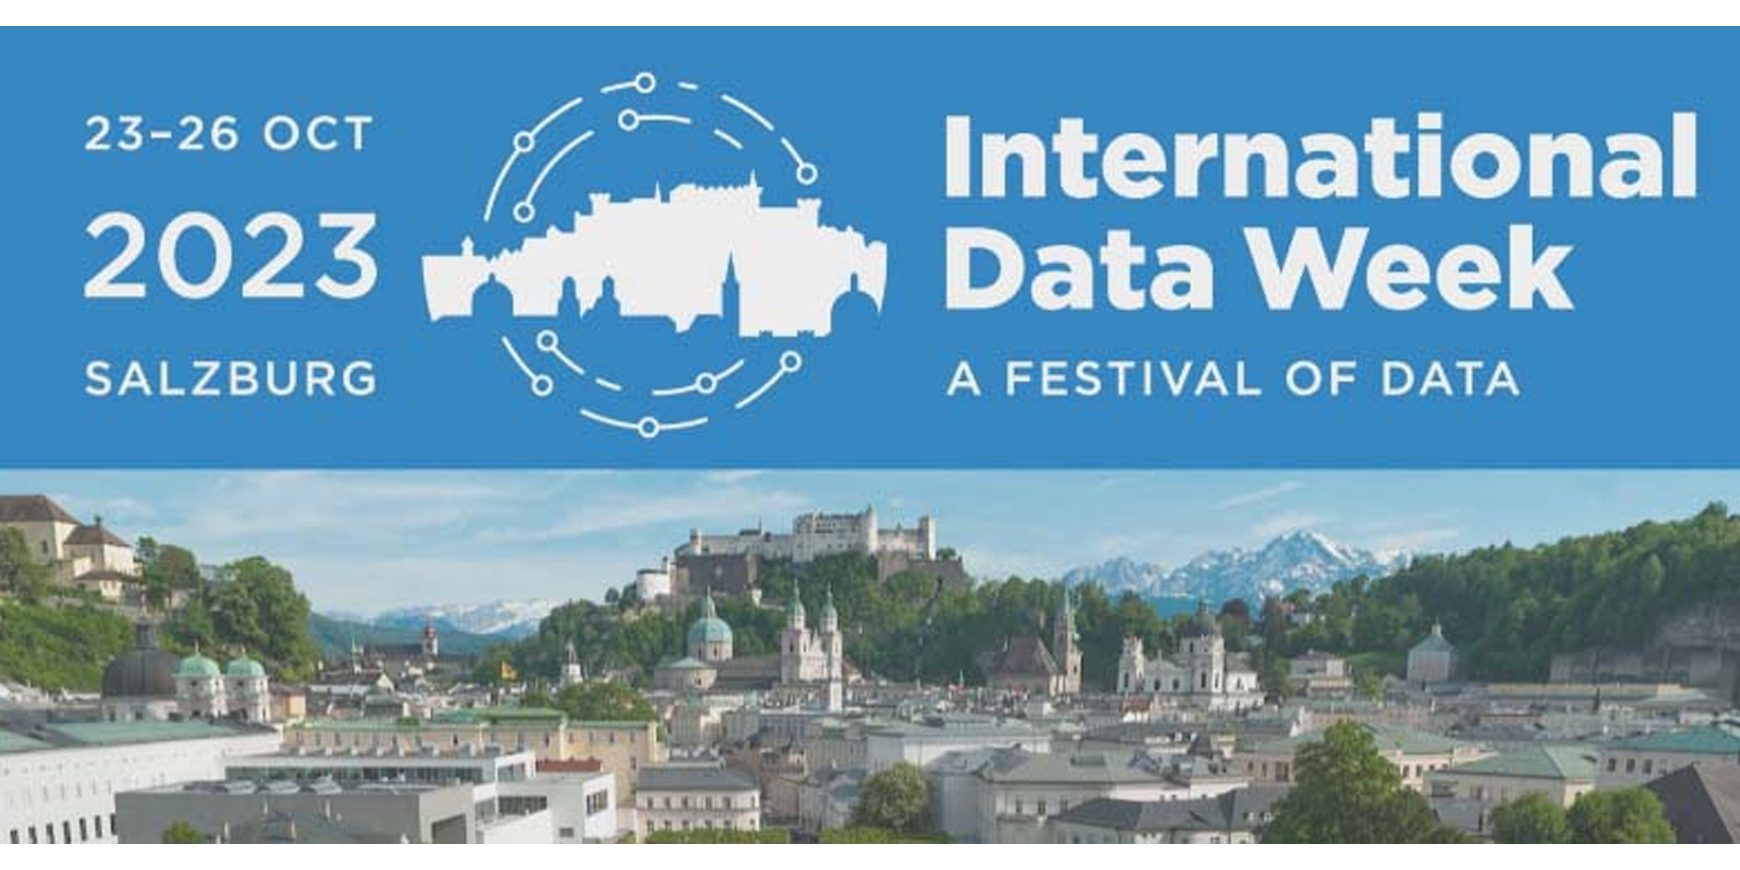  International Data Week 2023